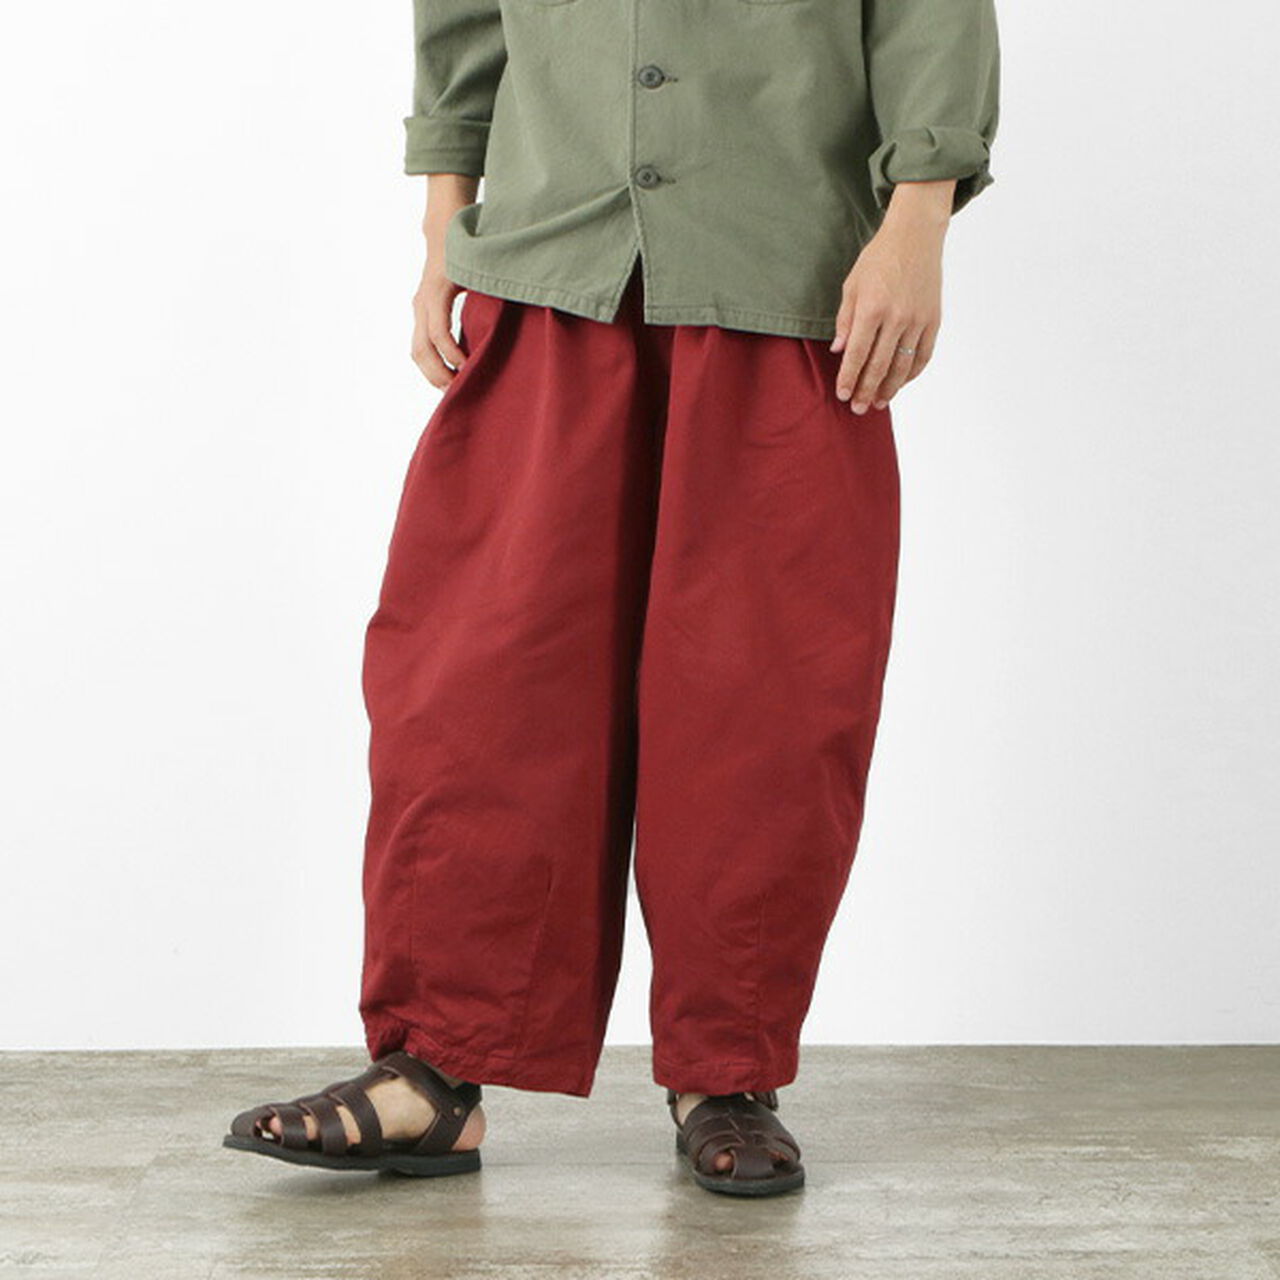 Cotton Chino Circus Pants,Grey, large image number 0